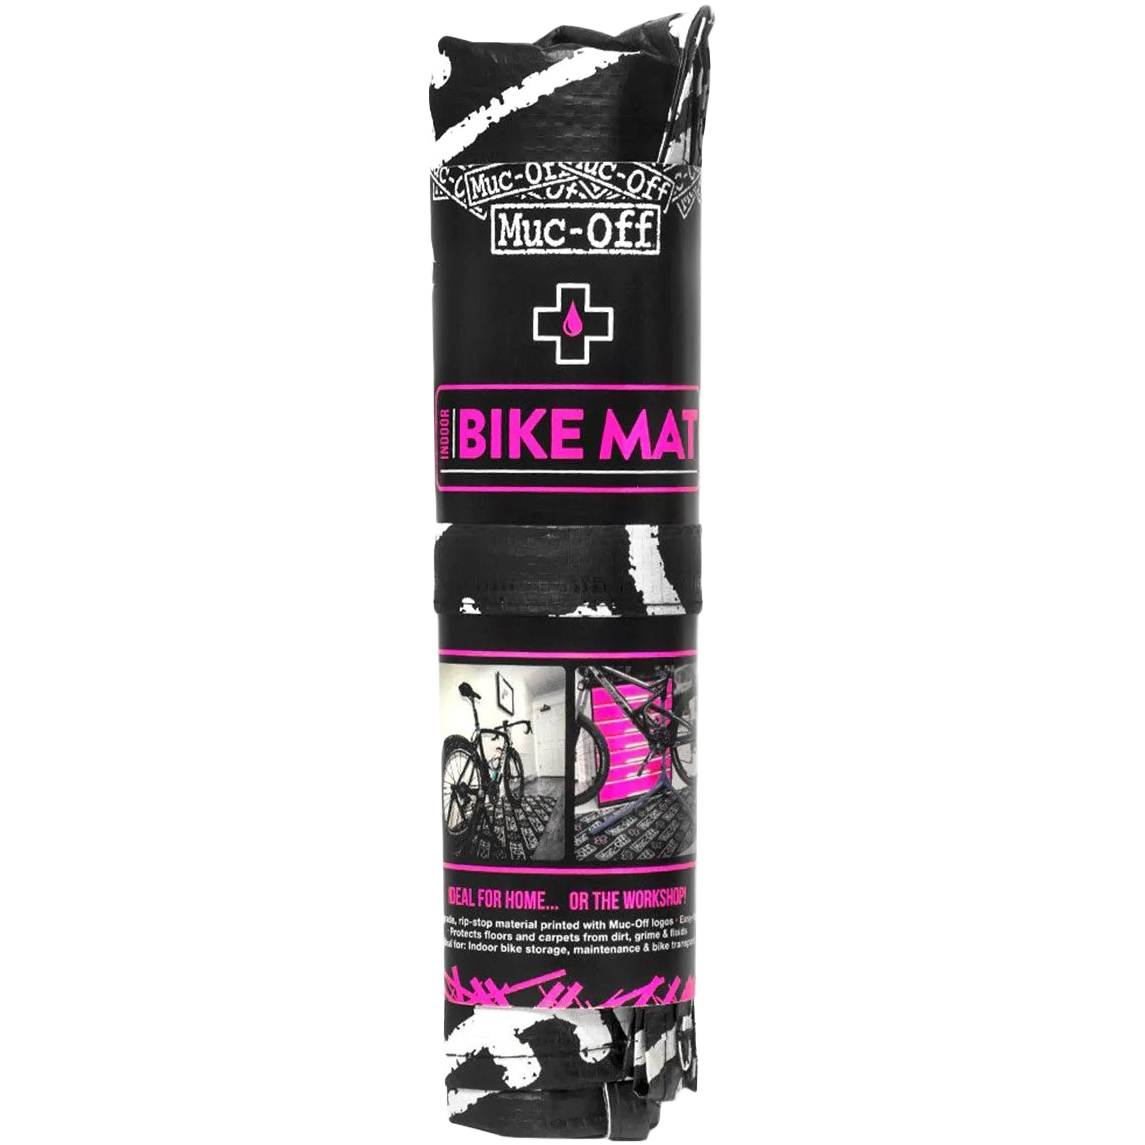 Productfoto van Muc-Off Bike Mat